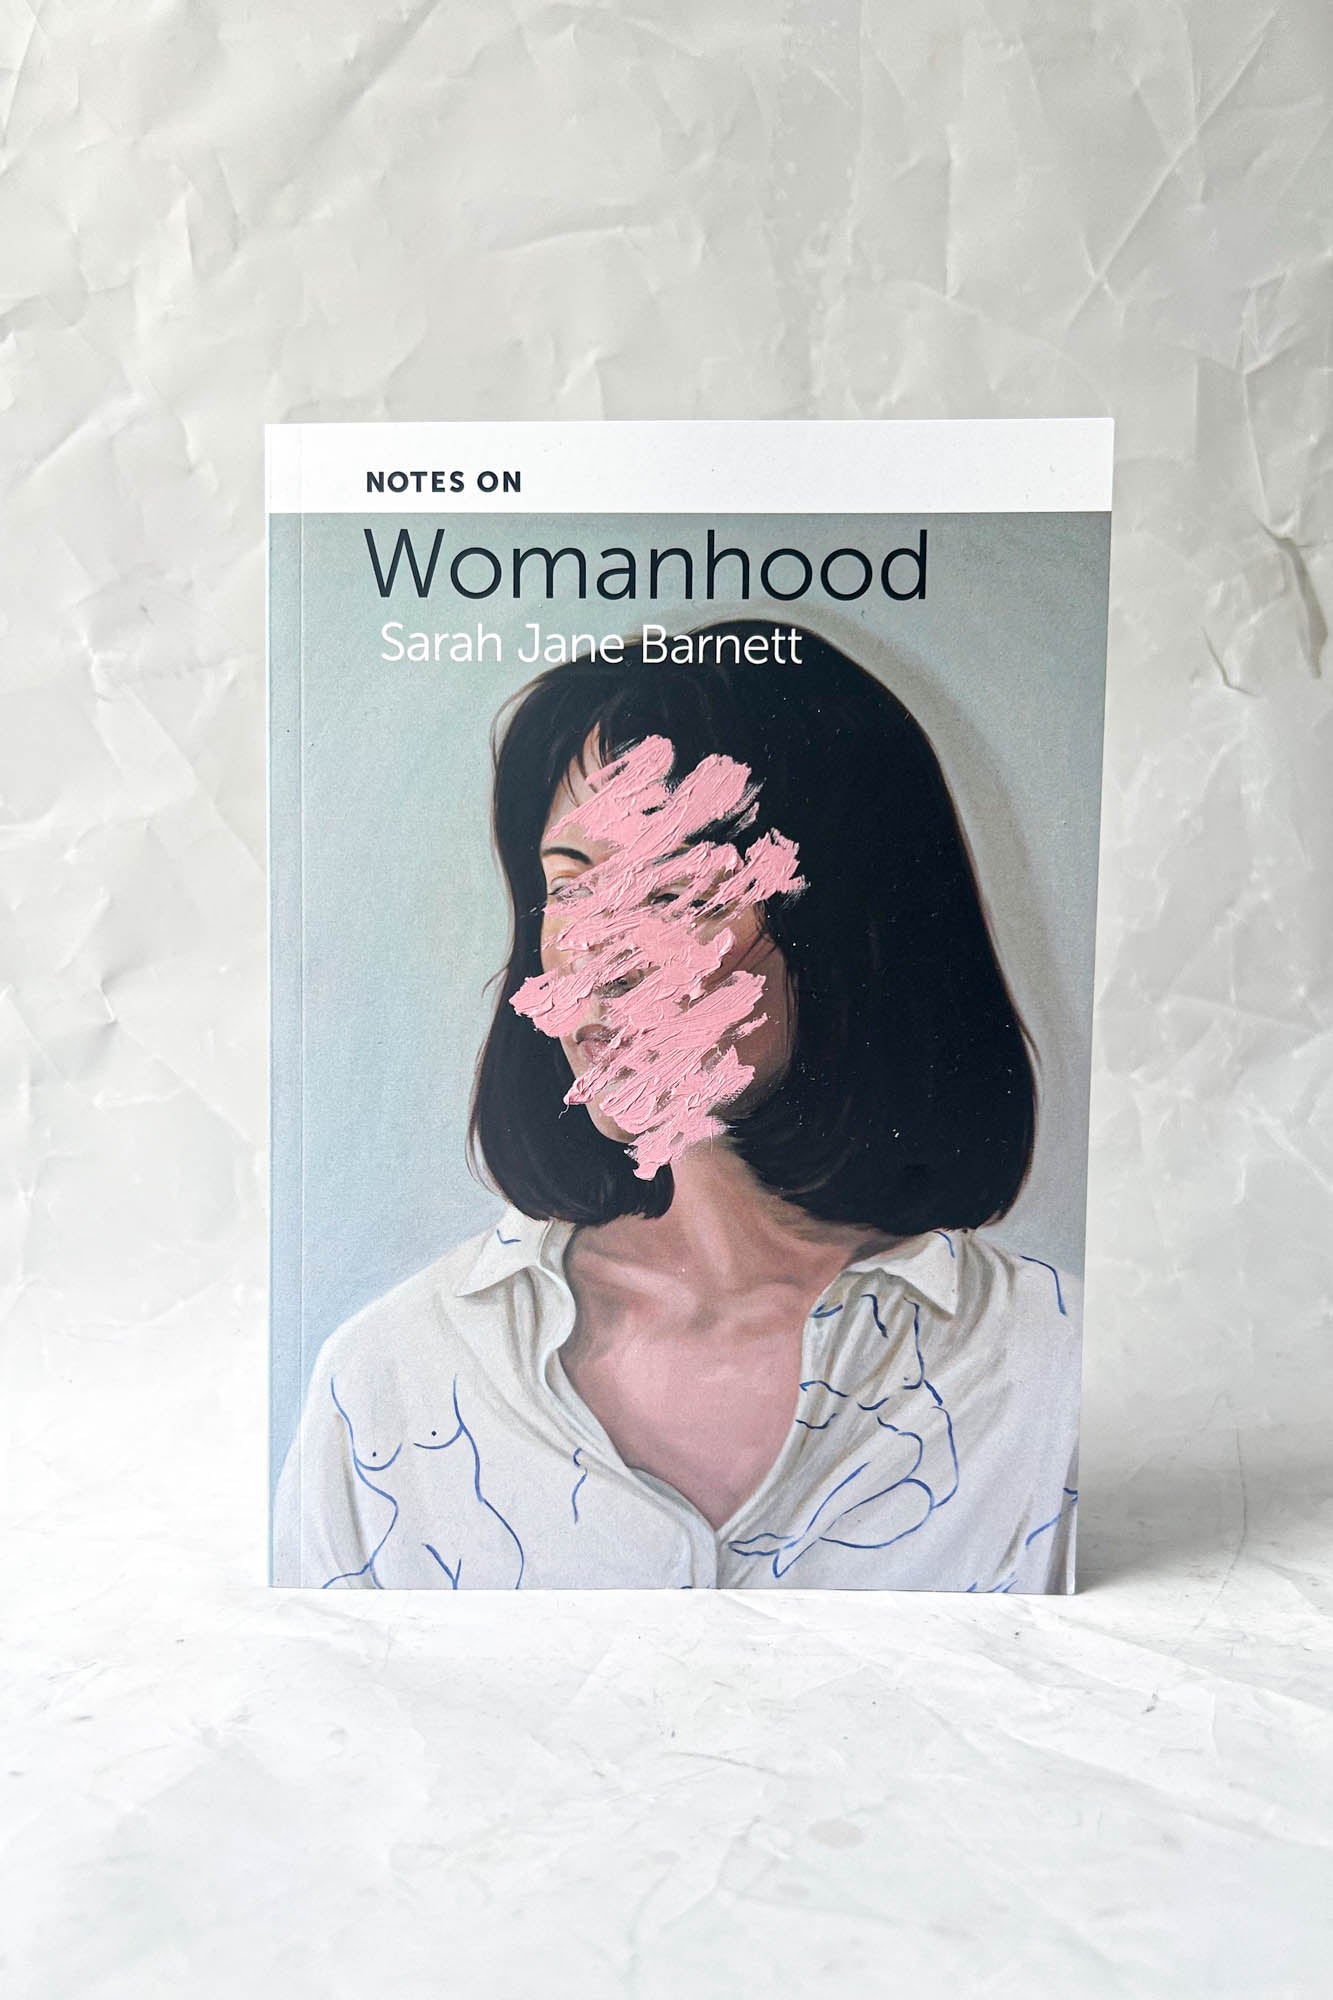 Notes on Womanhood by Sarah Jane Barnett